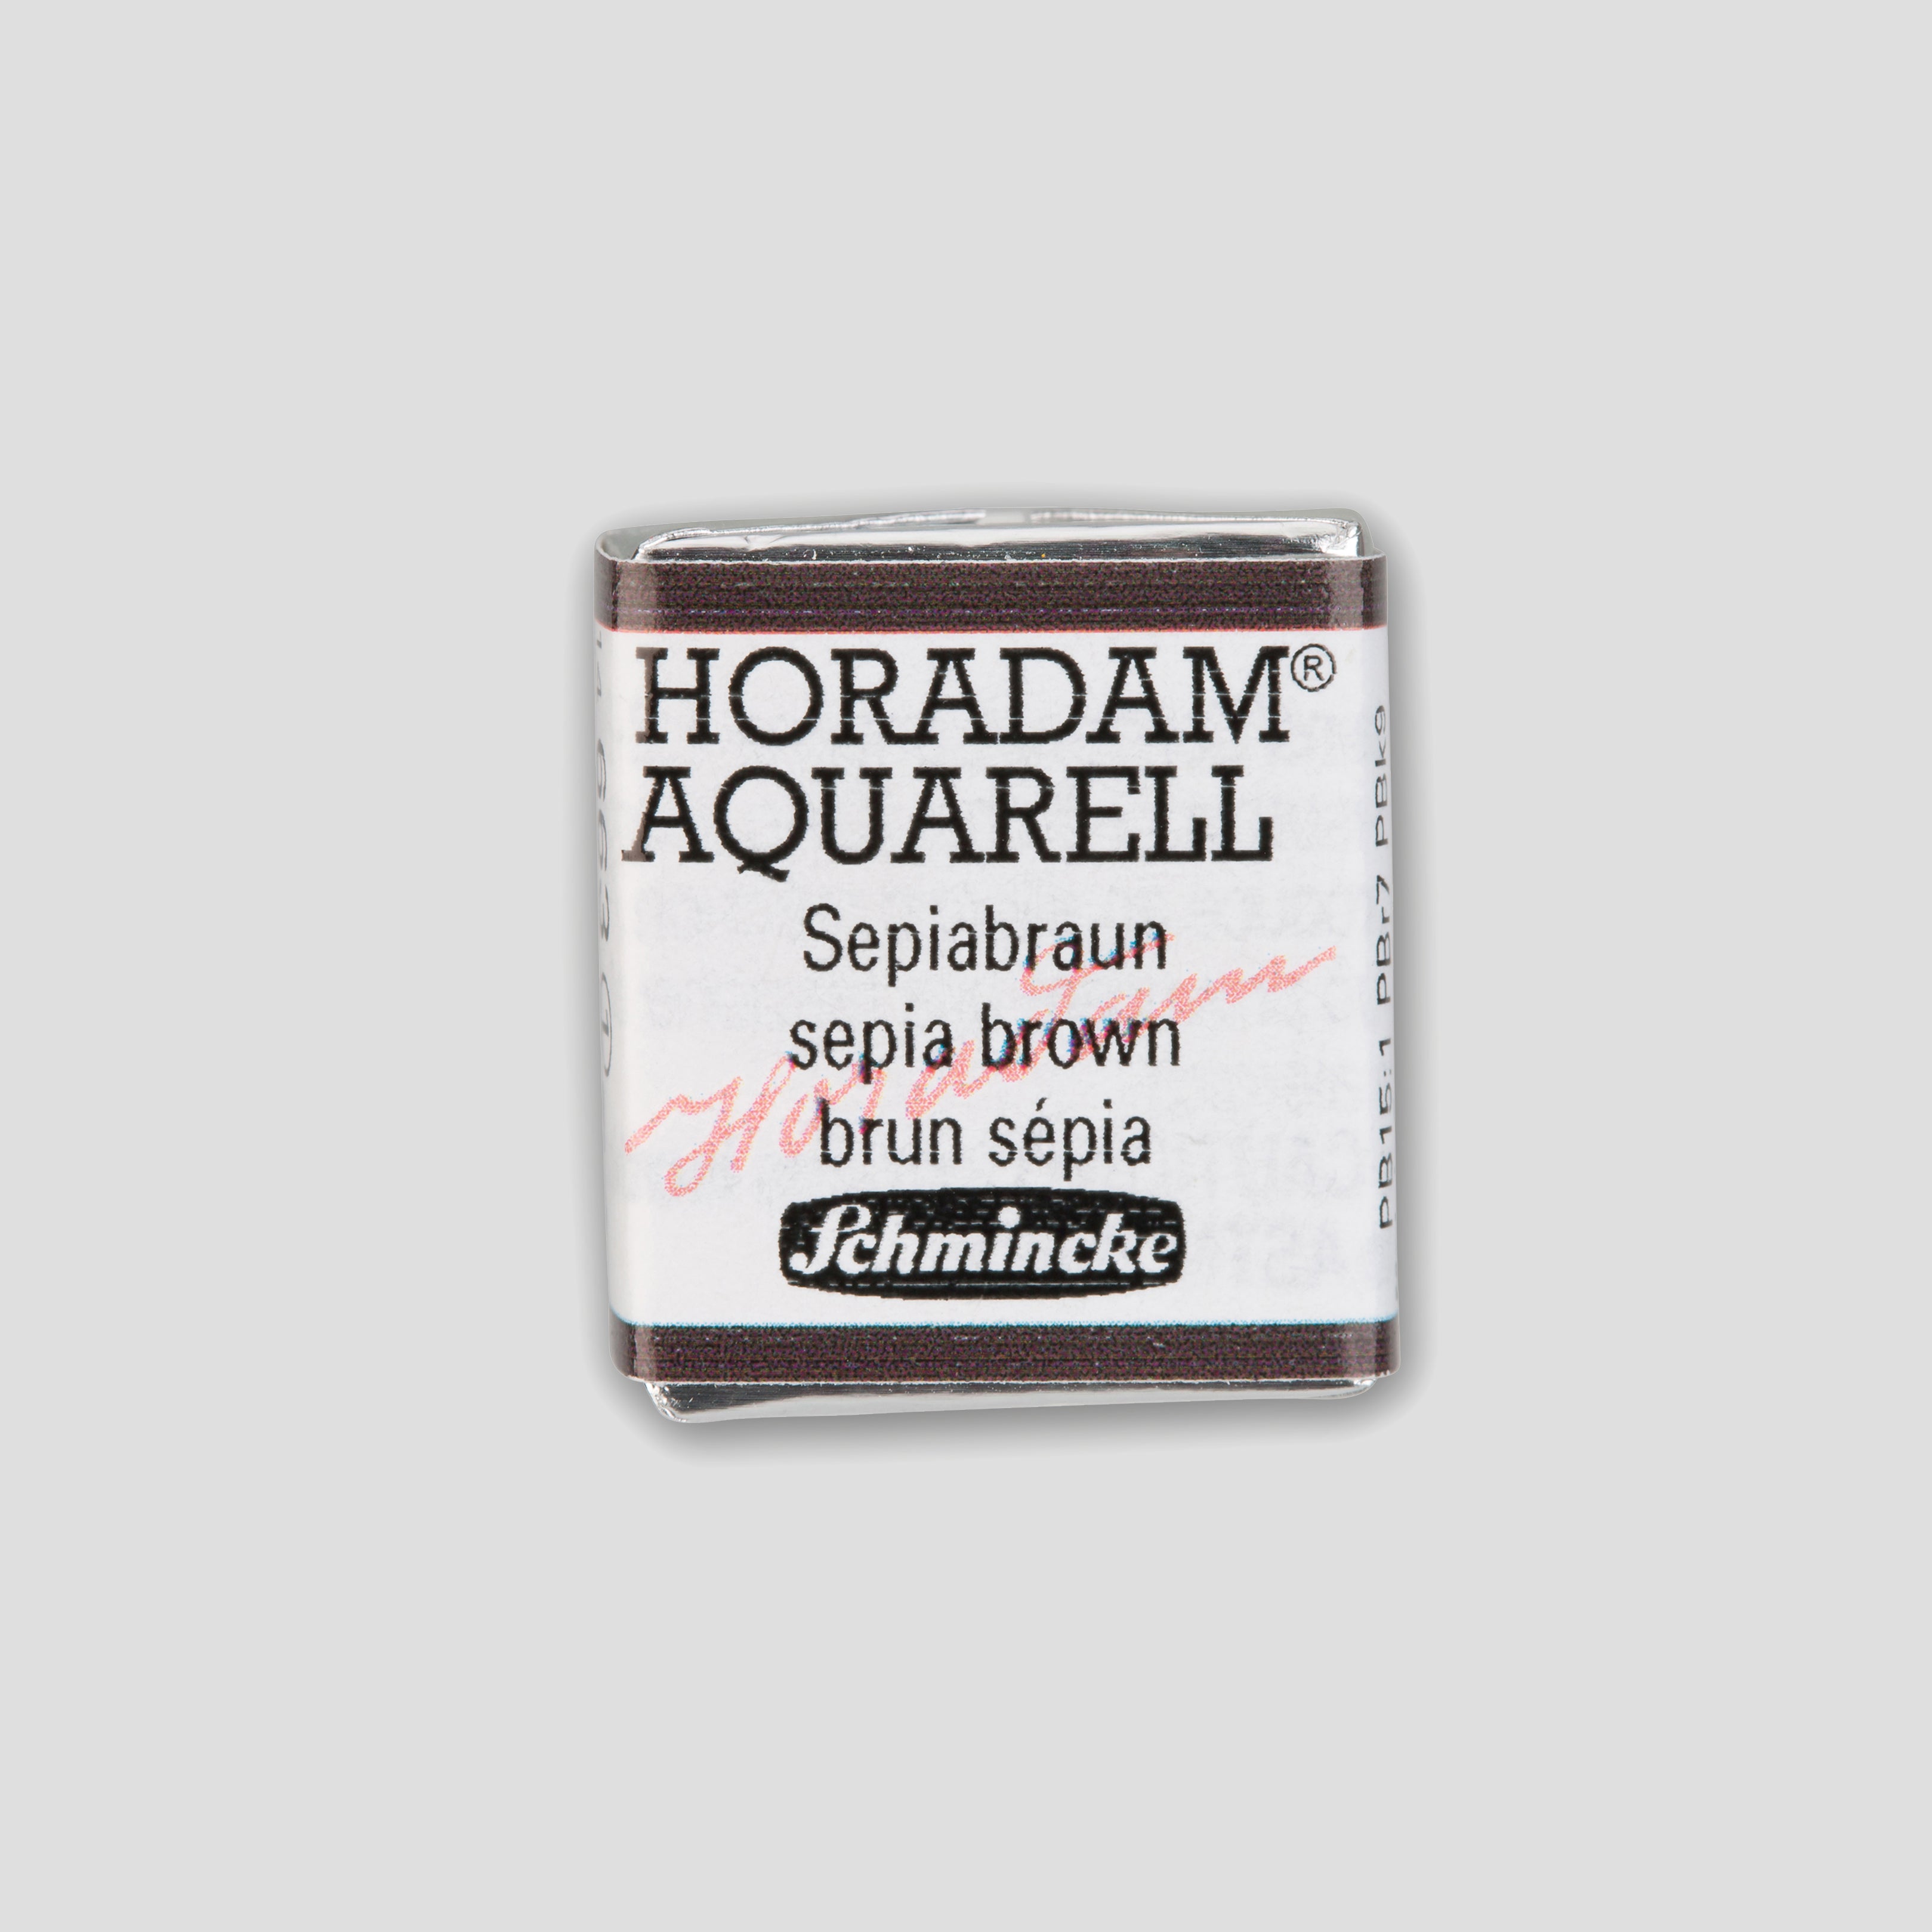 Schmincke Horadam® Halbpfanne Sepiabraun – Splendith